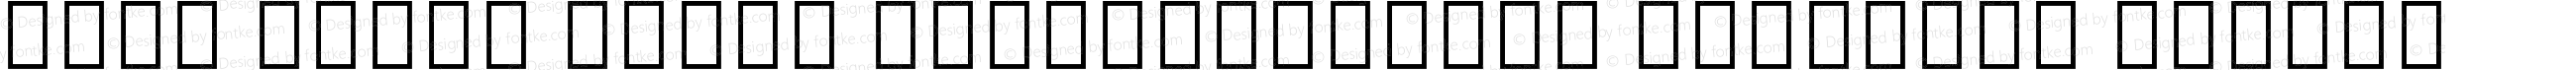 Noto Serif Tamil SemiCondensed SemiBold Italic